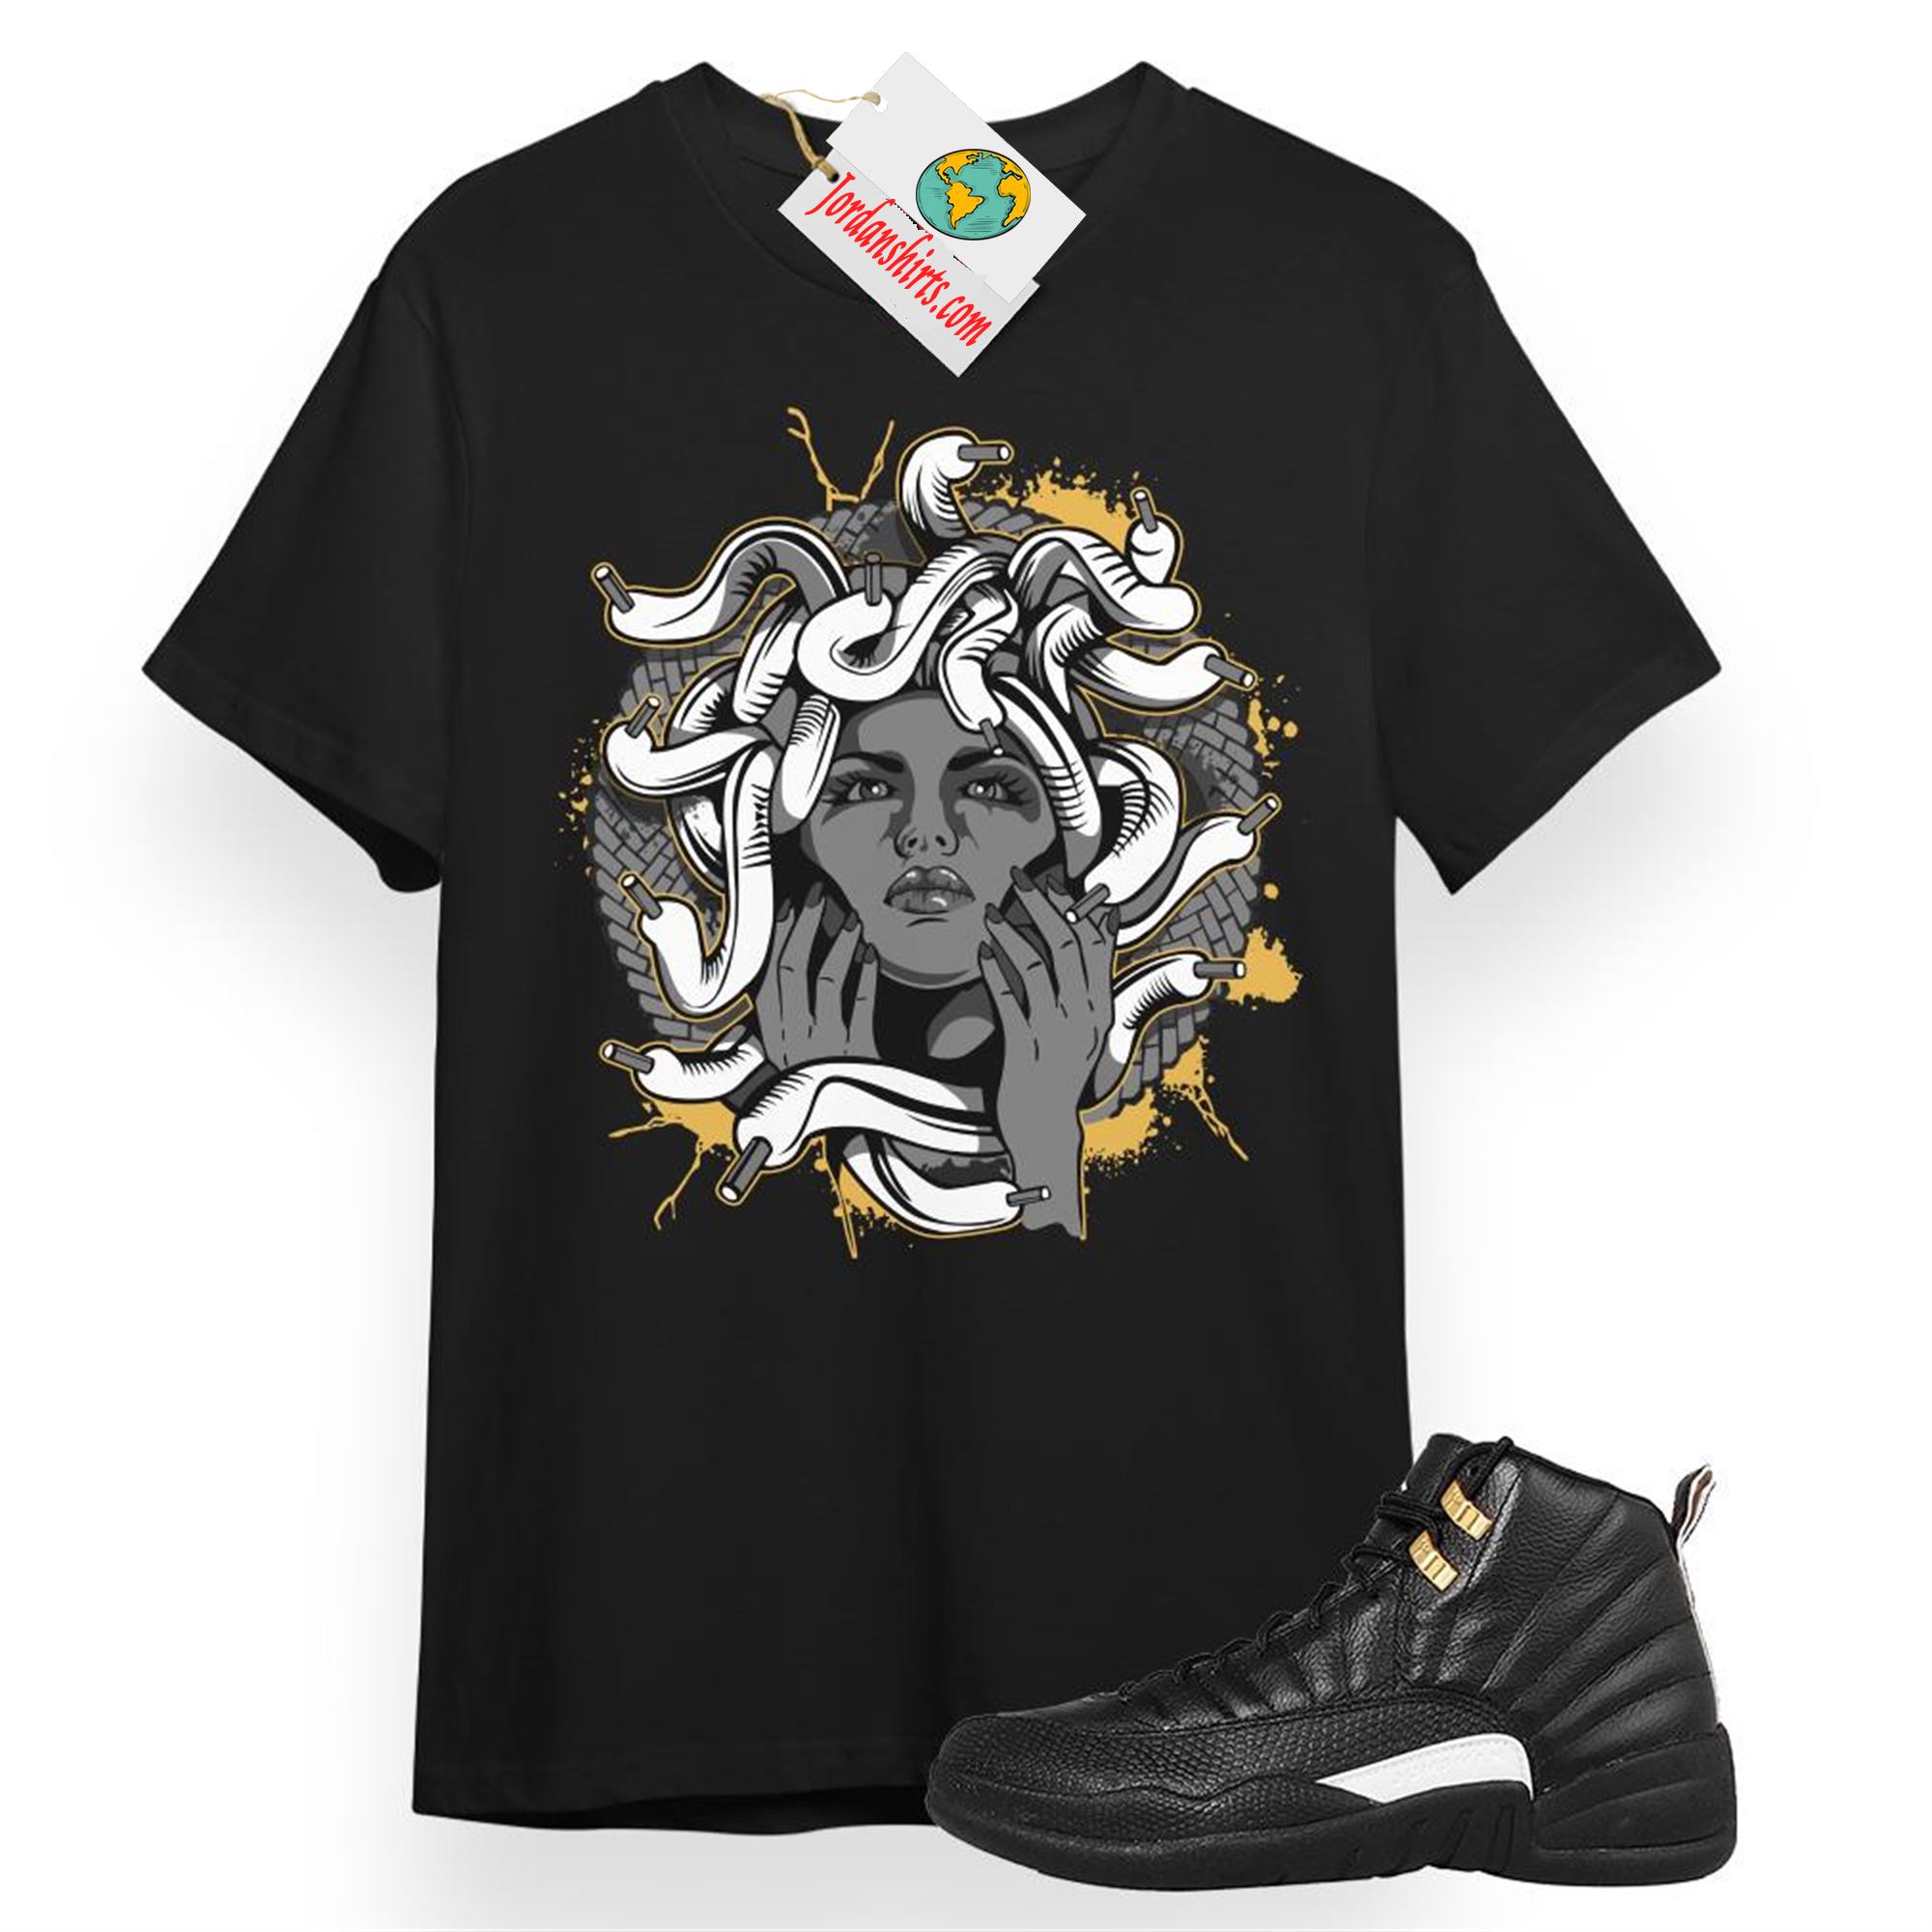 Jordan 12 Shirt, Medusa Black T-shirt Air Jordan 12 Ovo Black 12s Plus Size Up To 5xl